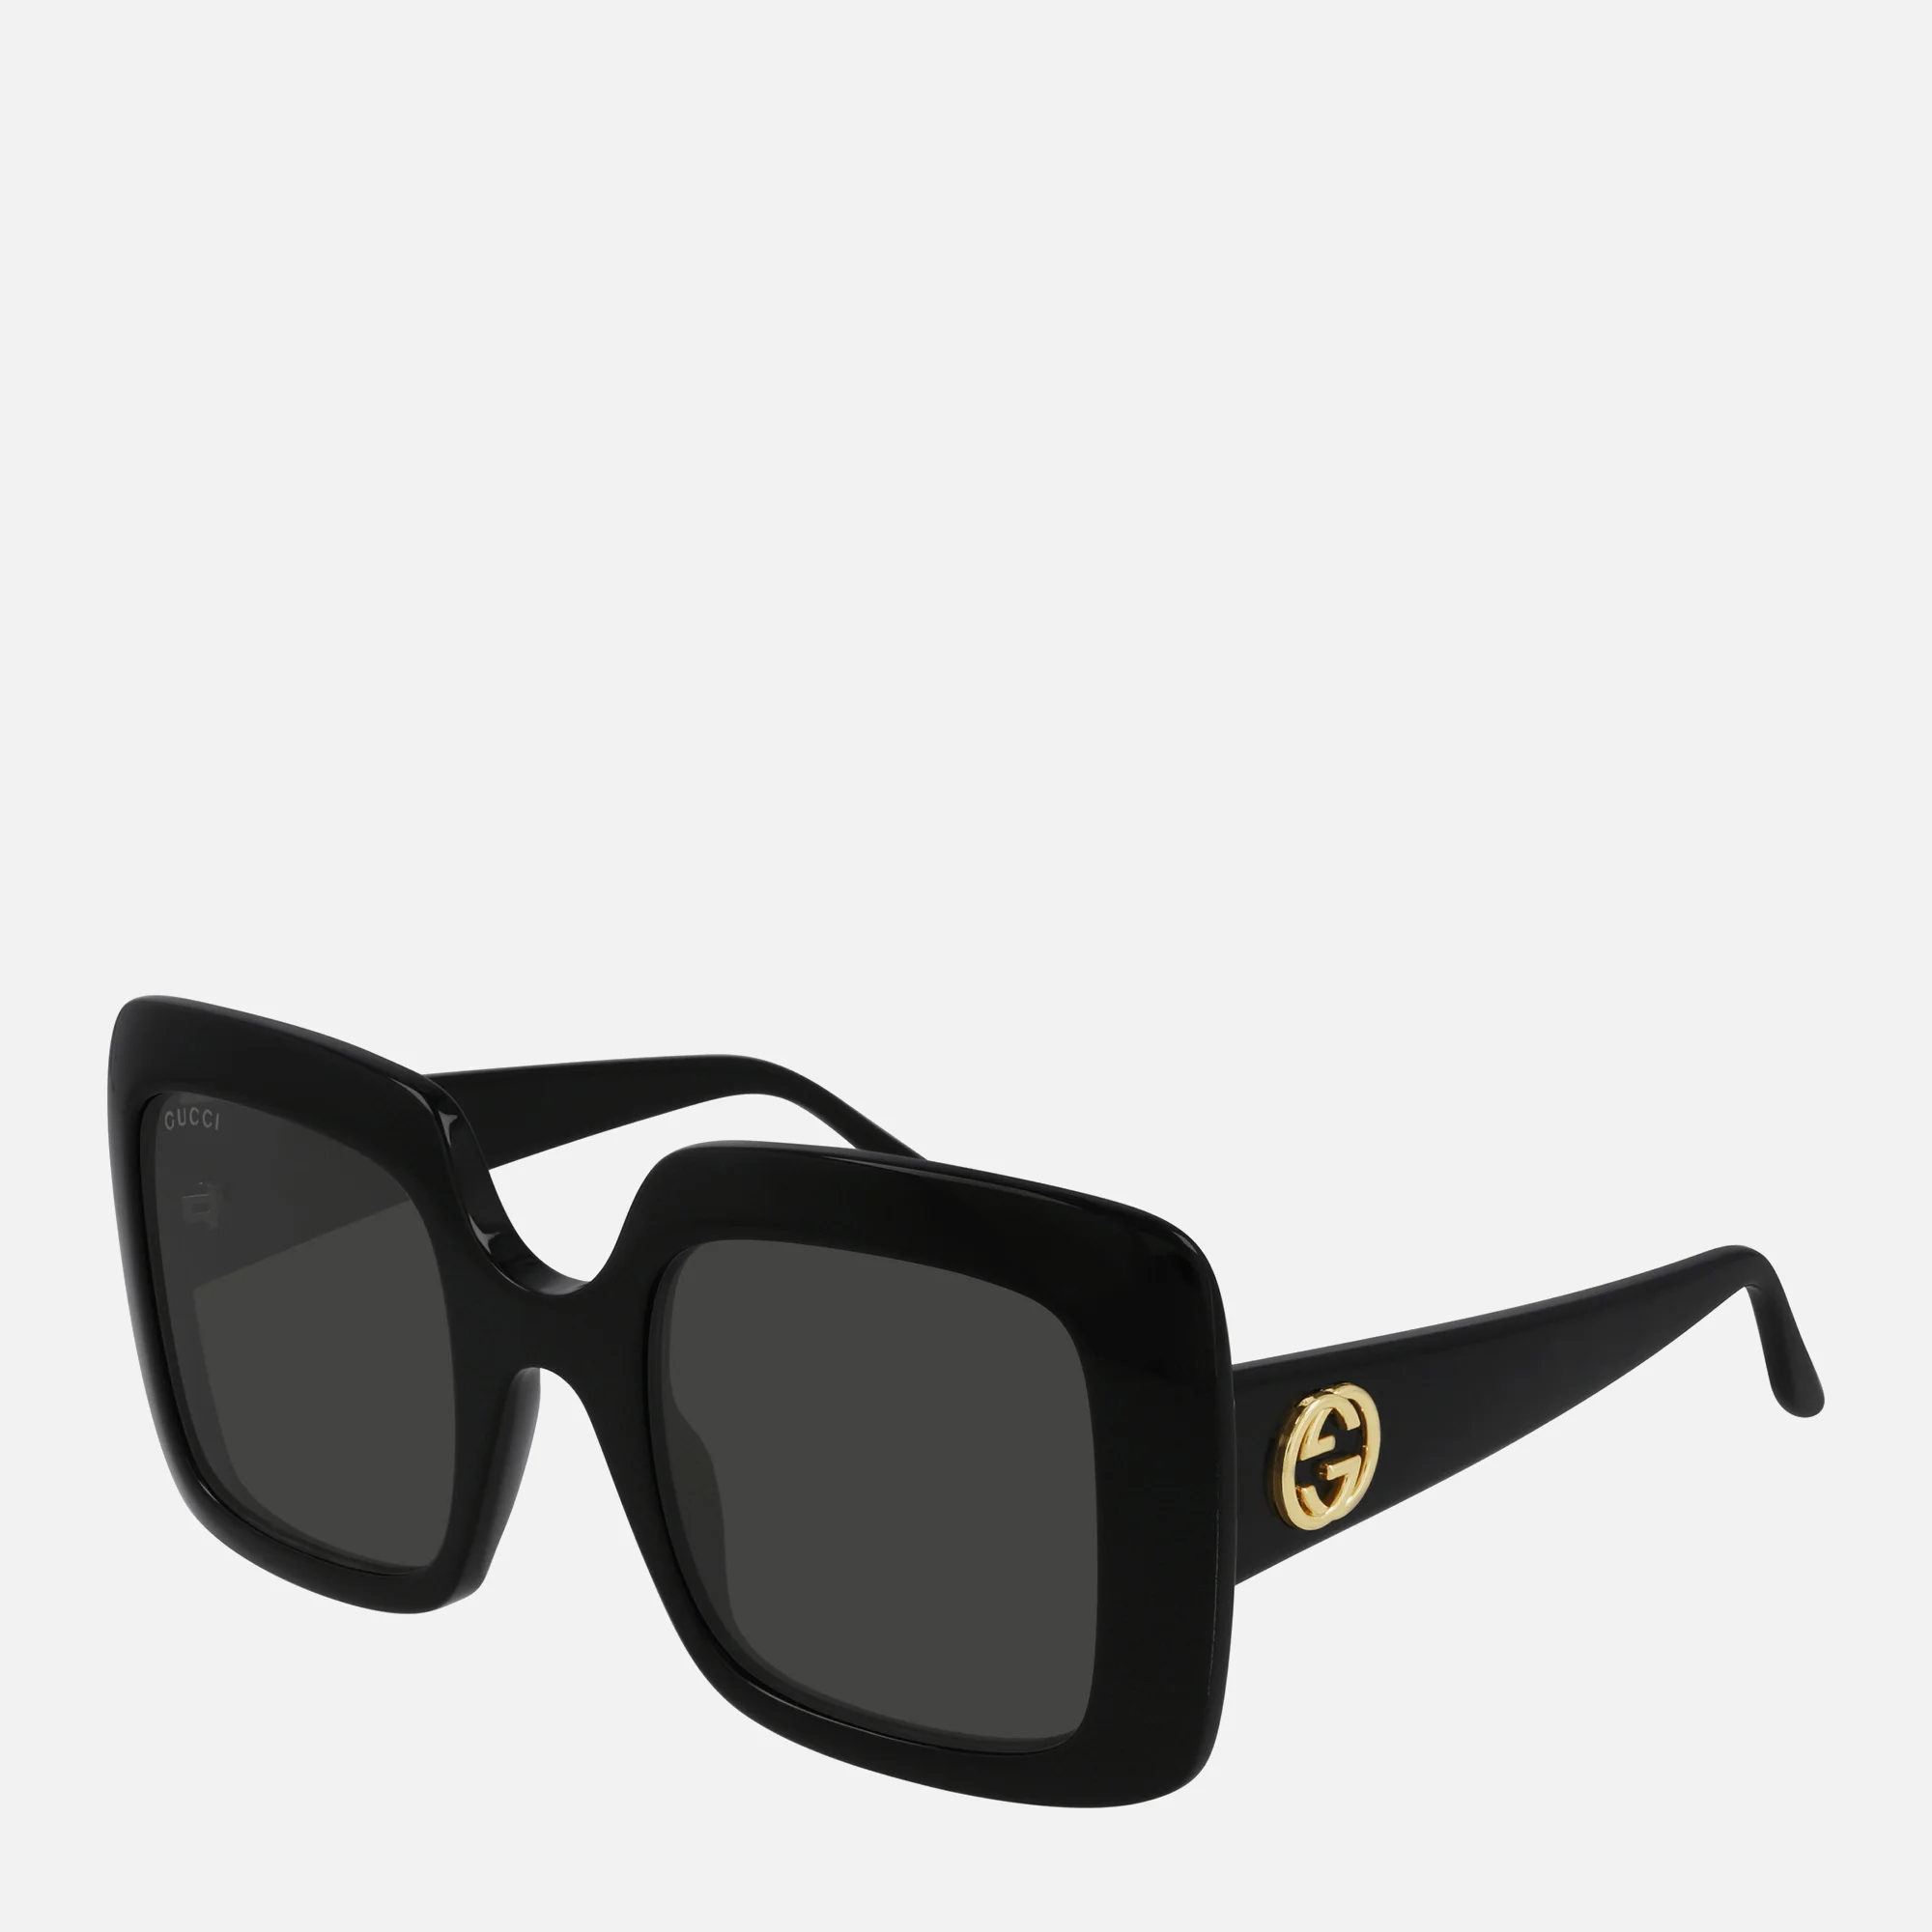 Gucci Women's GG Square Frame Acetate Sunglasses - Black/Black/Grey Image 1